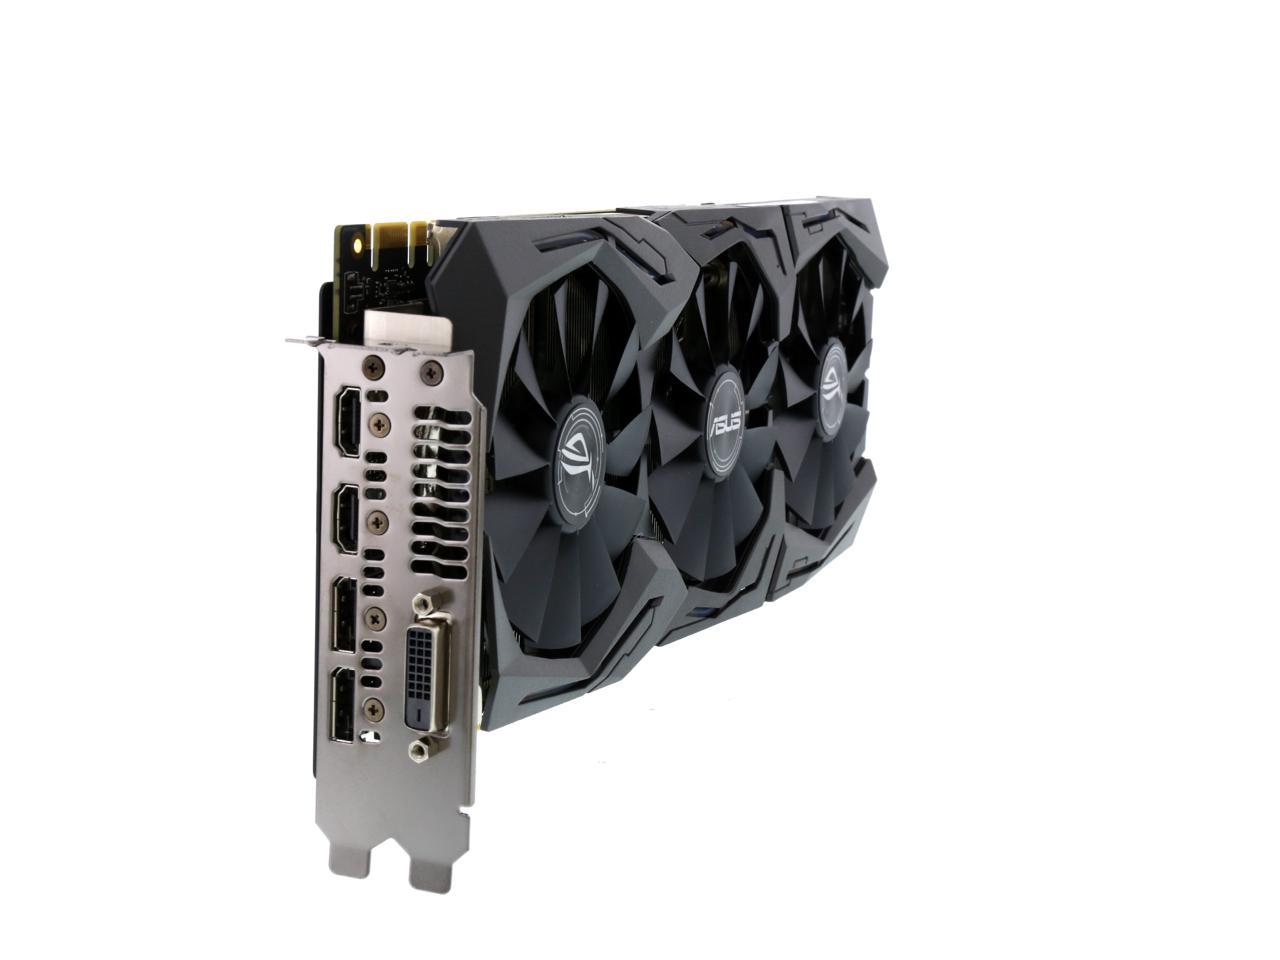 ASUS ROG GeForce GTX 1070 Video Card with RGB Lighting STRIX 